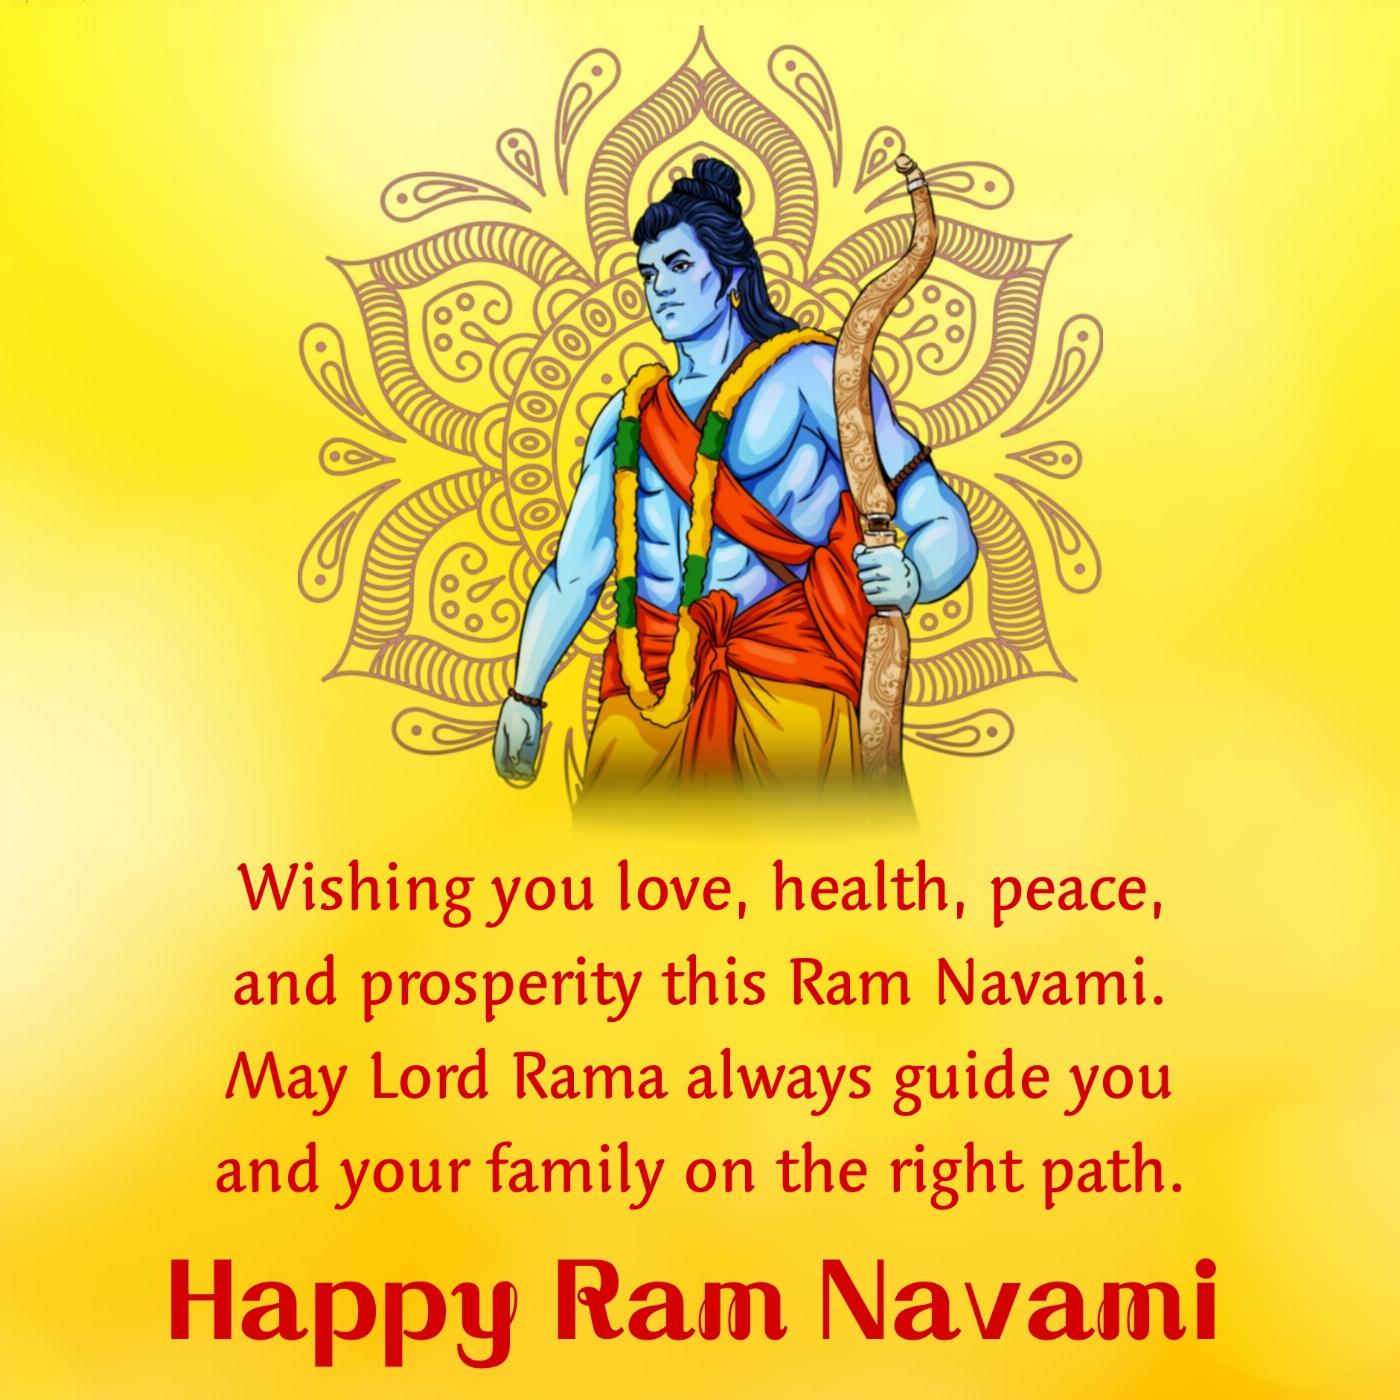 Wishing you love health peace and prosperity this Ram Navami